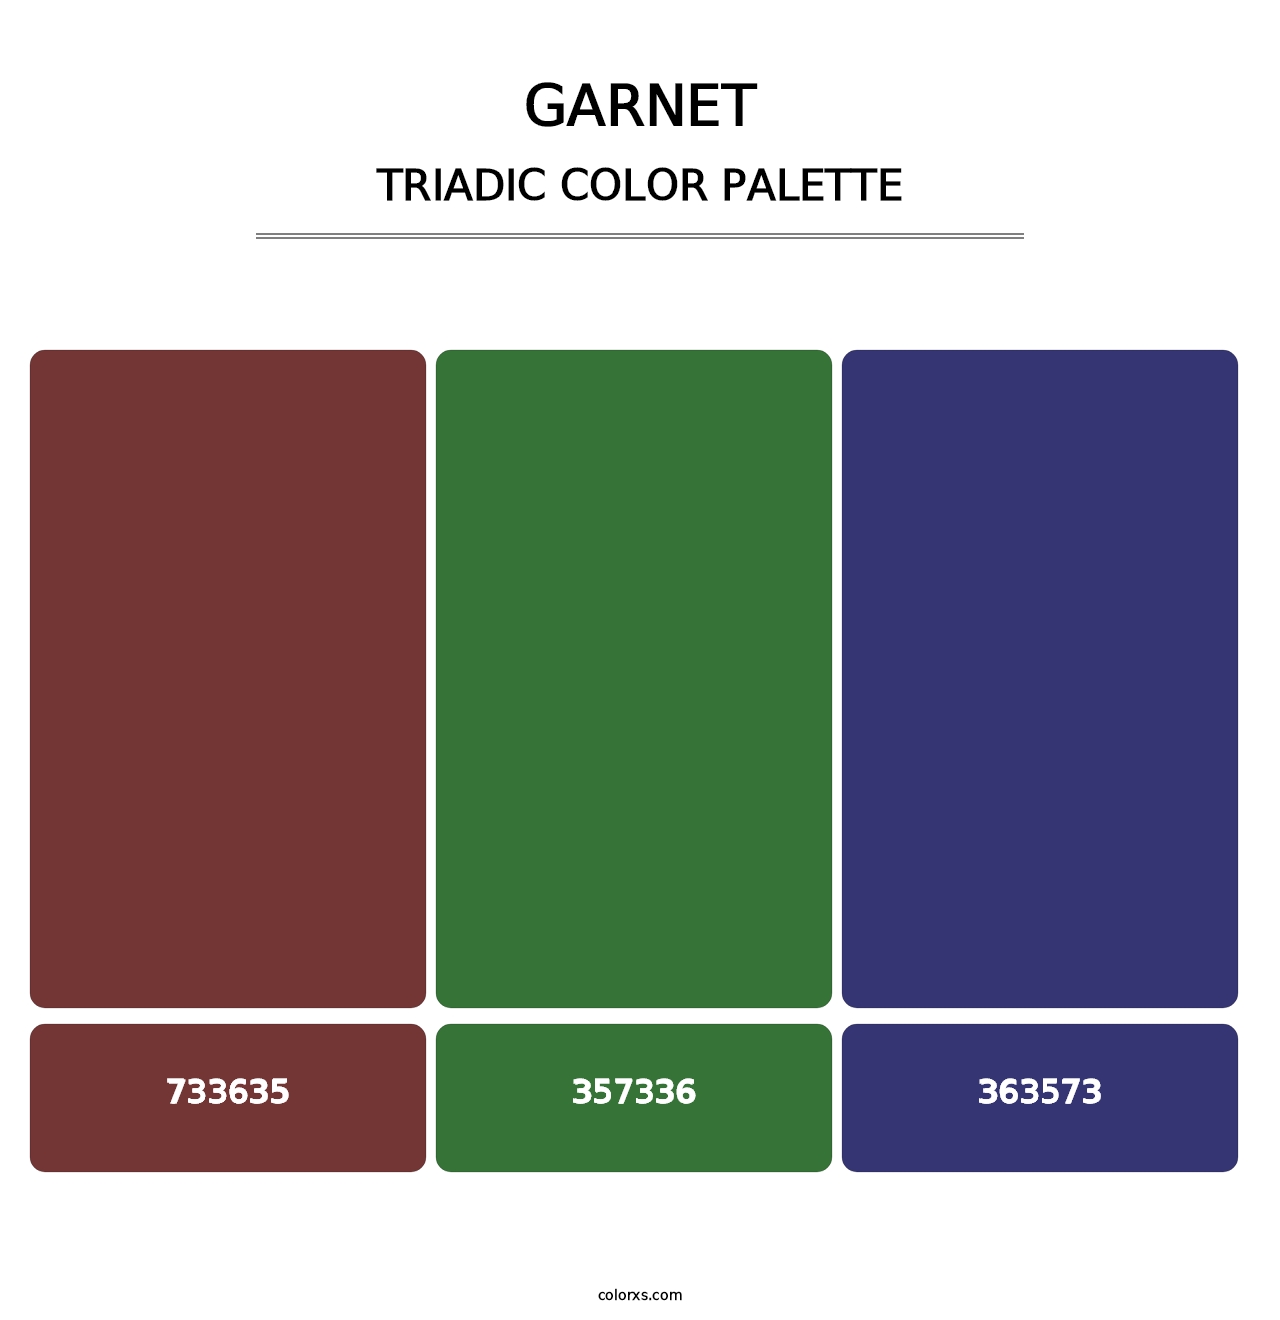 Garnet - Triadic Color Palette